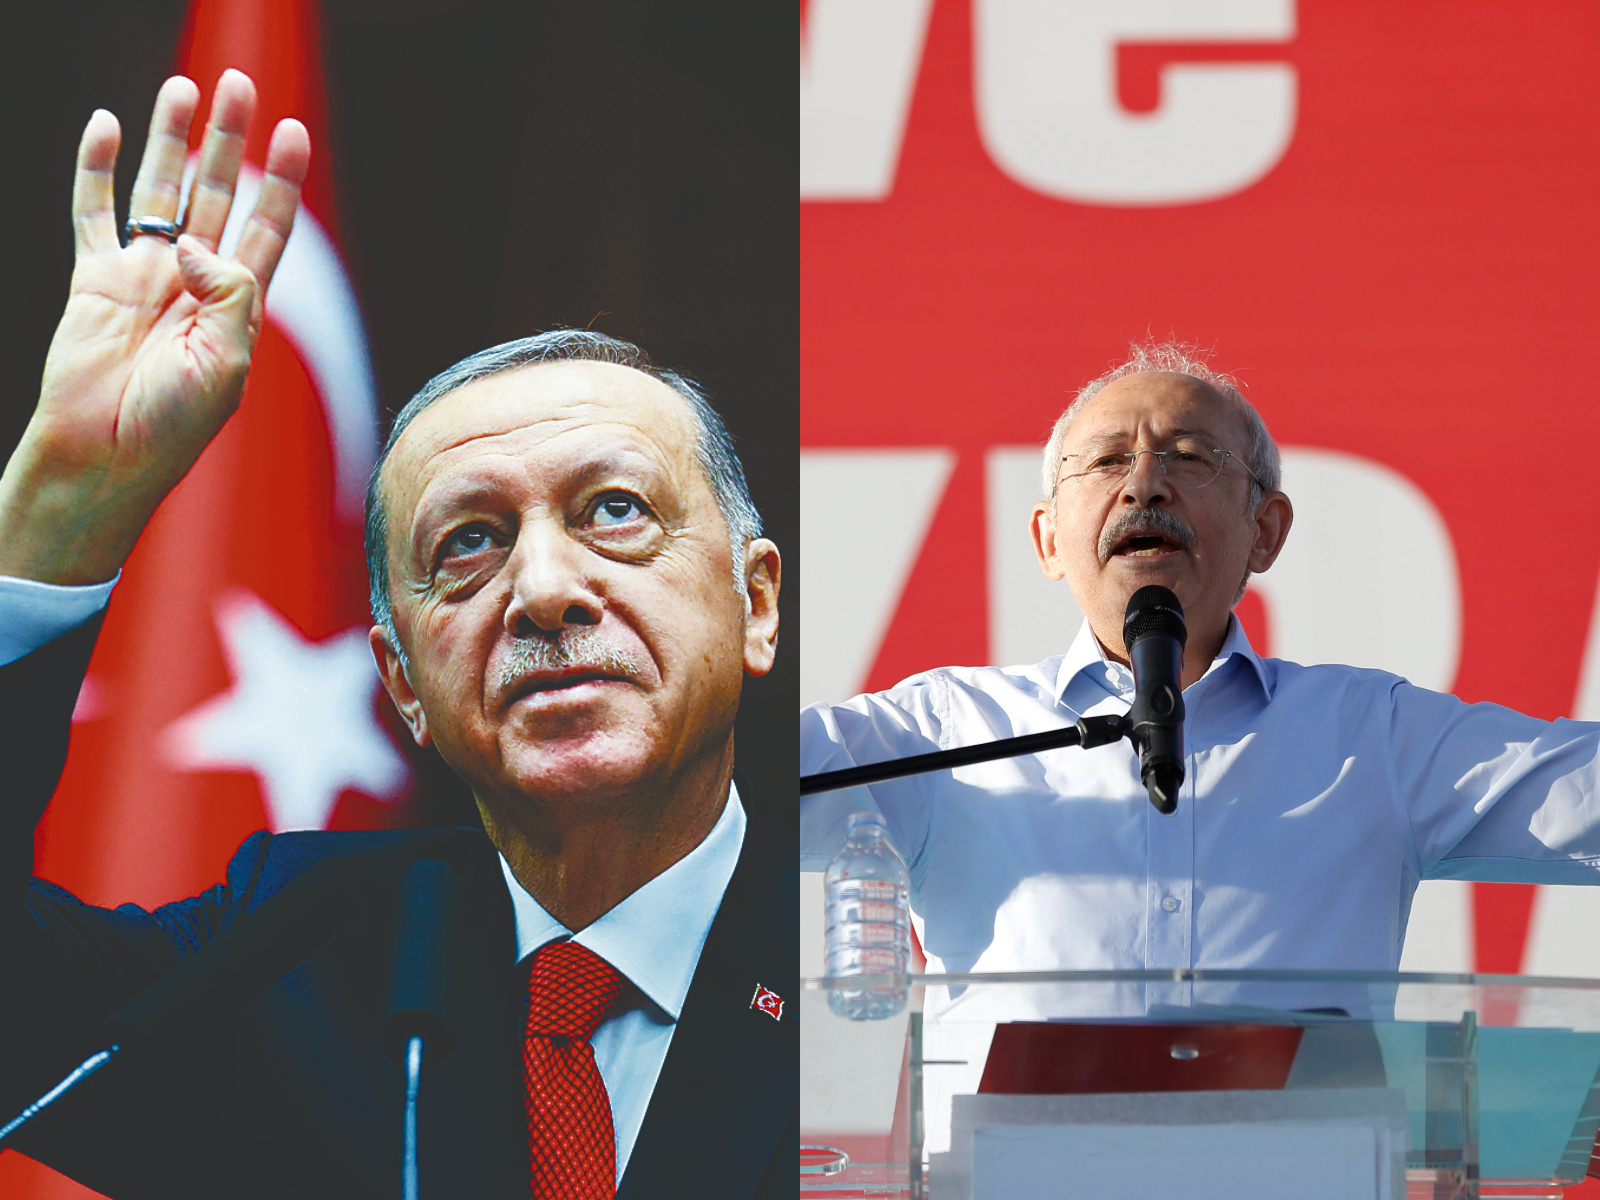   Le Point : Μπορεί ο Ερντογάν να χάσει τις εκλογές;